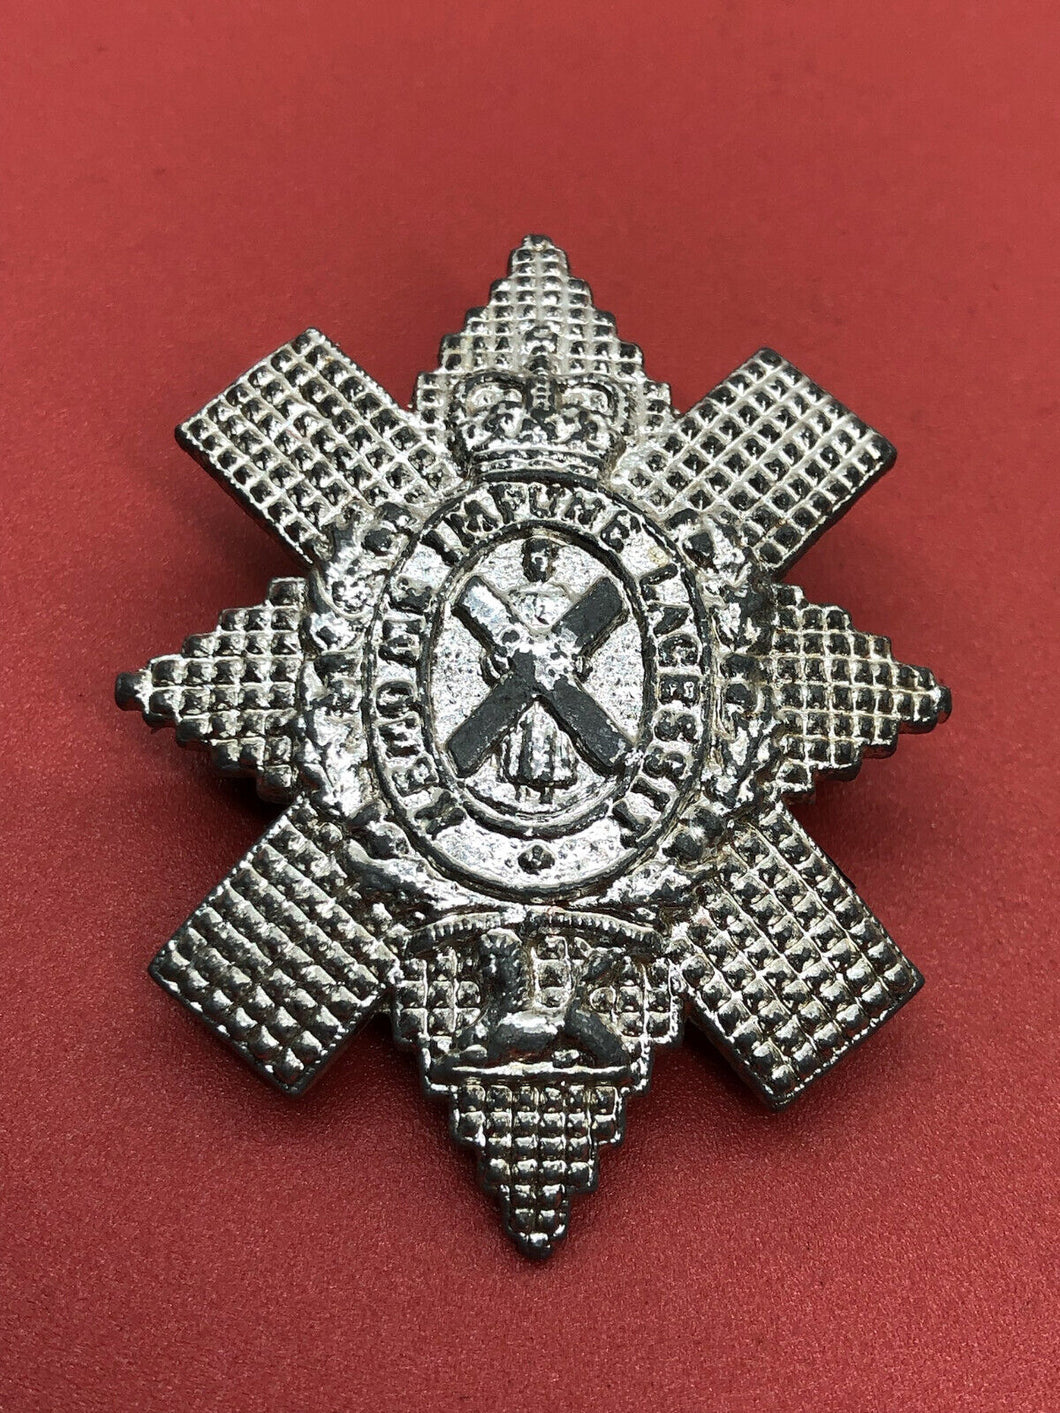 British Army Scottish Regimental Brooch Badge - Royal Highlanders Black Watch